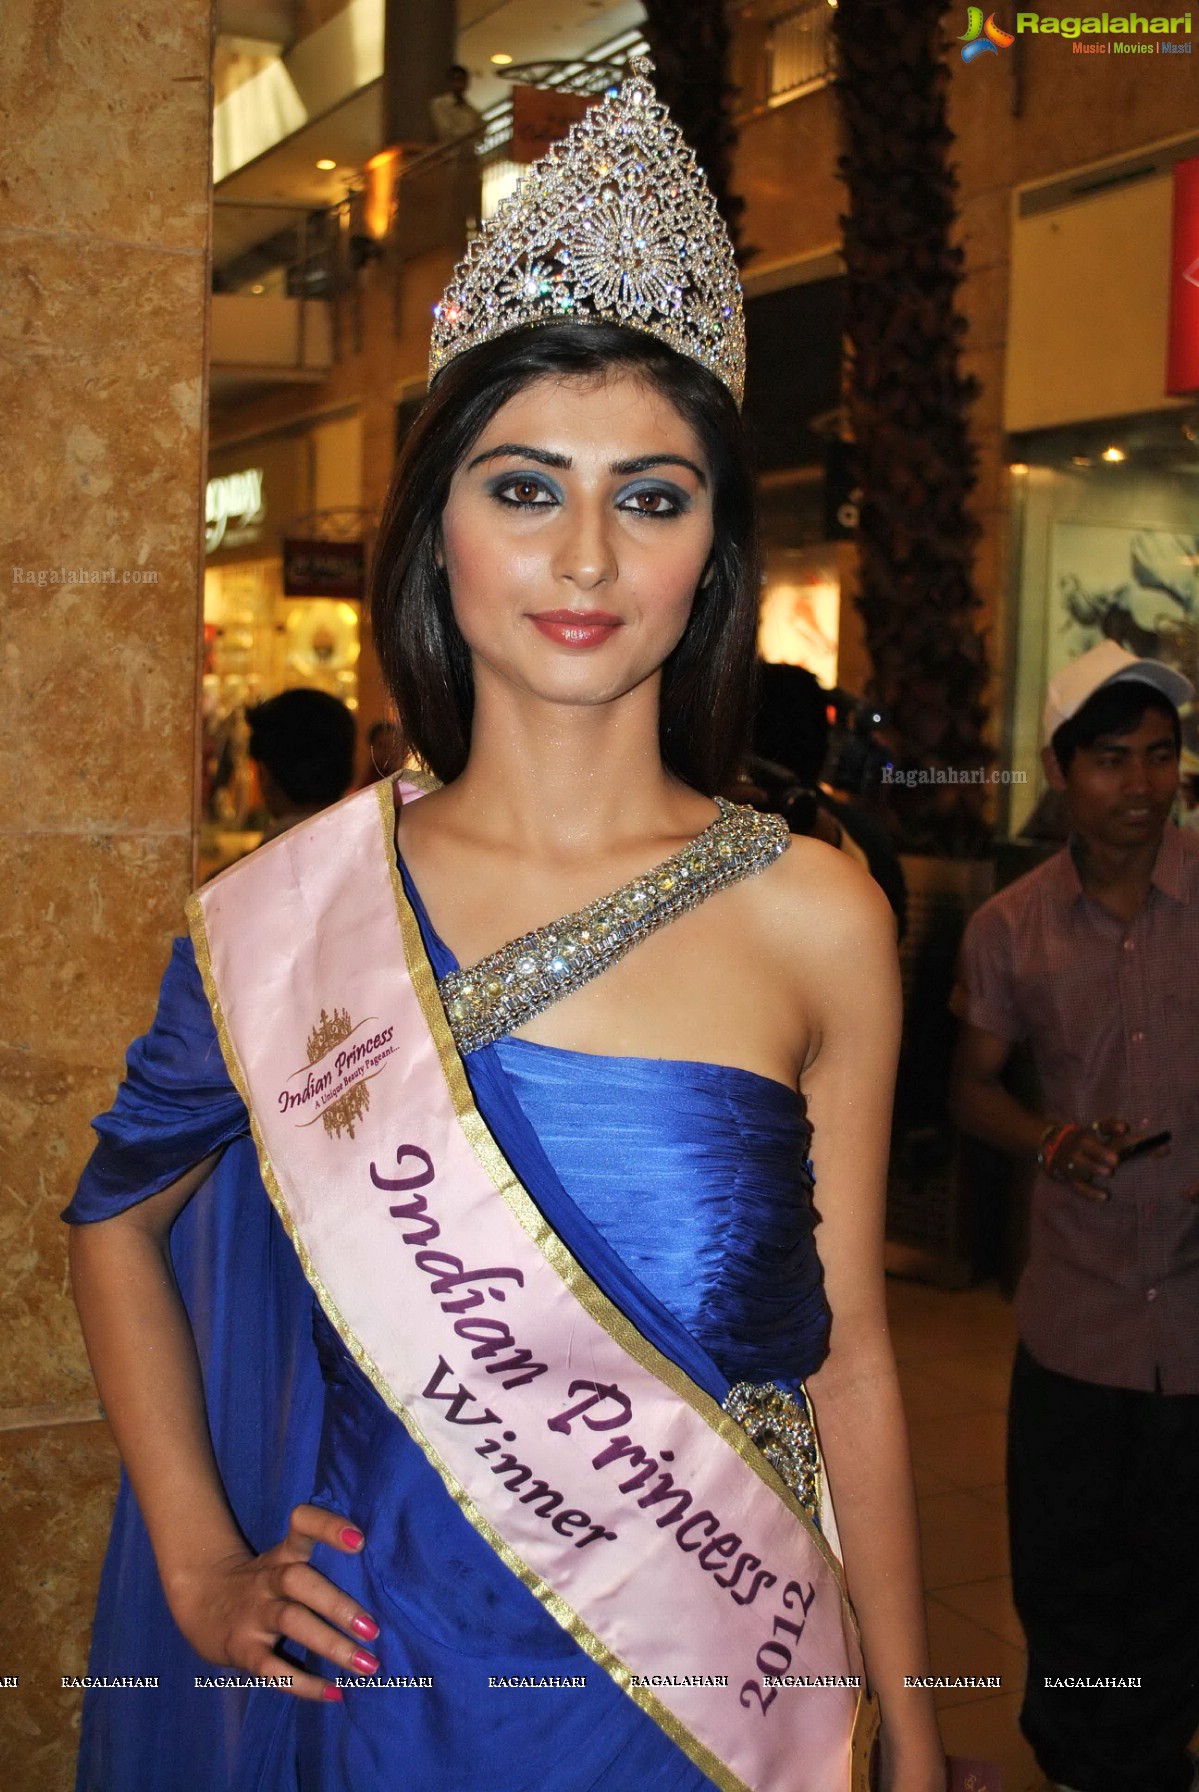 Indian Princess 2012 Winners at Worlds of Wonder, Noida